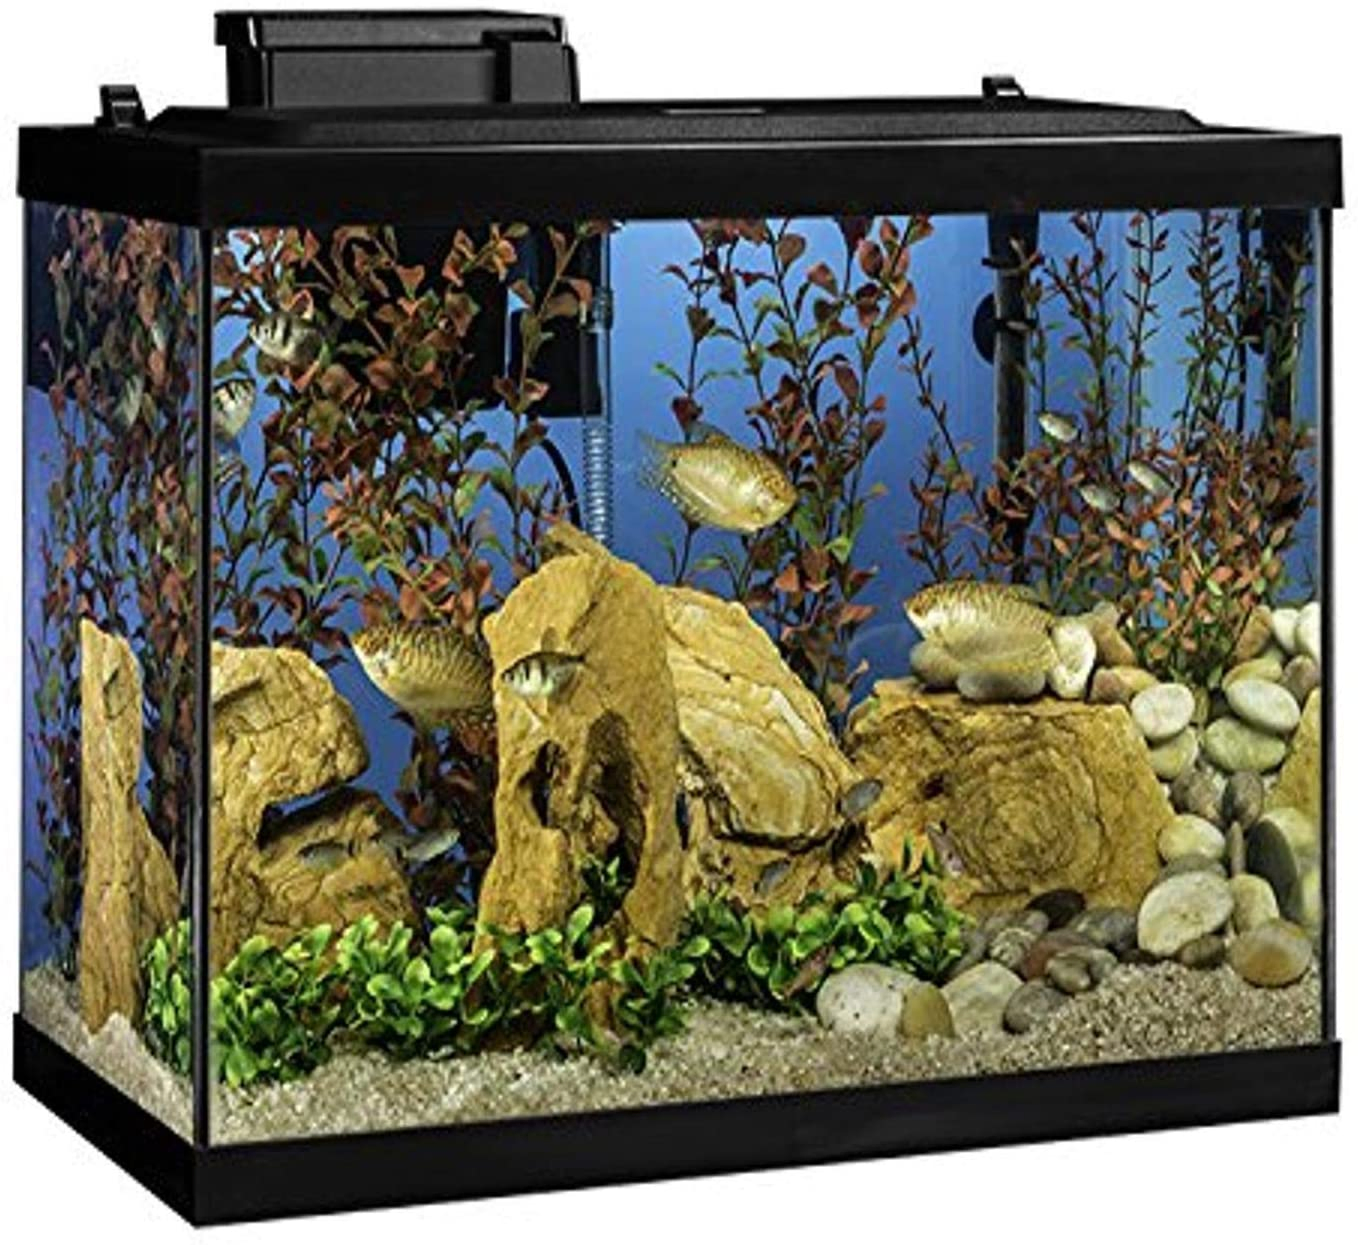 Tetra Aquarium 20 gallon Fish tank